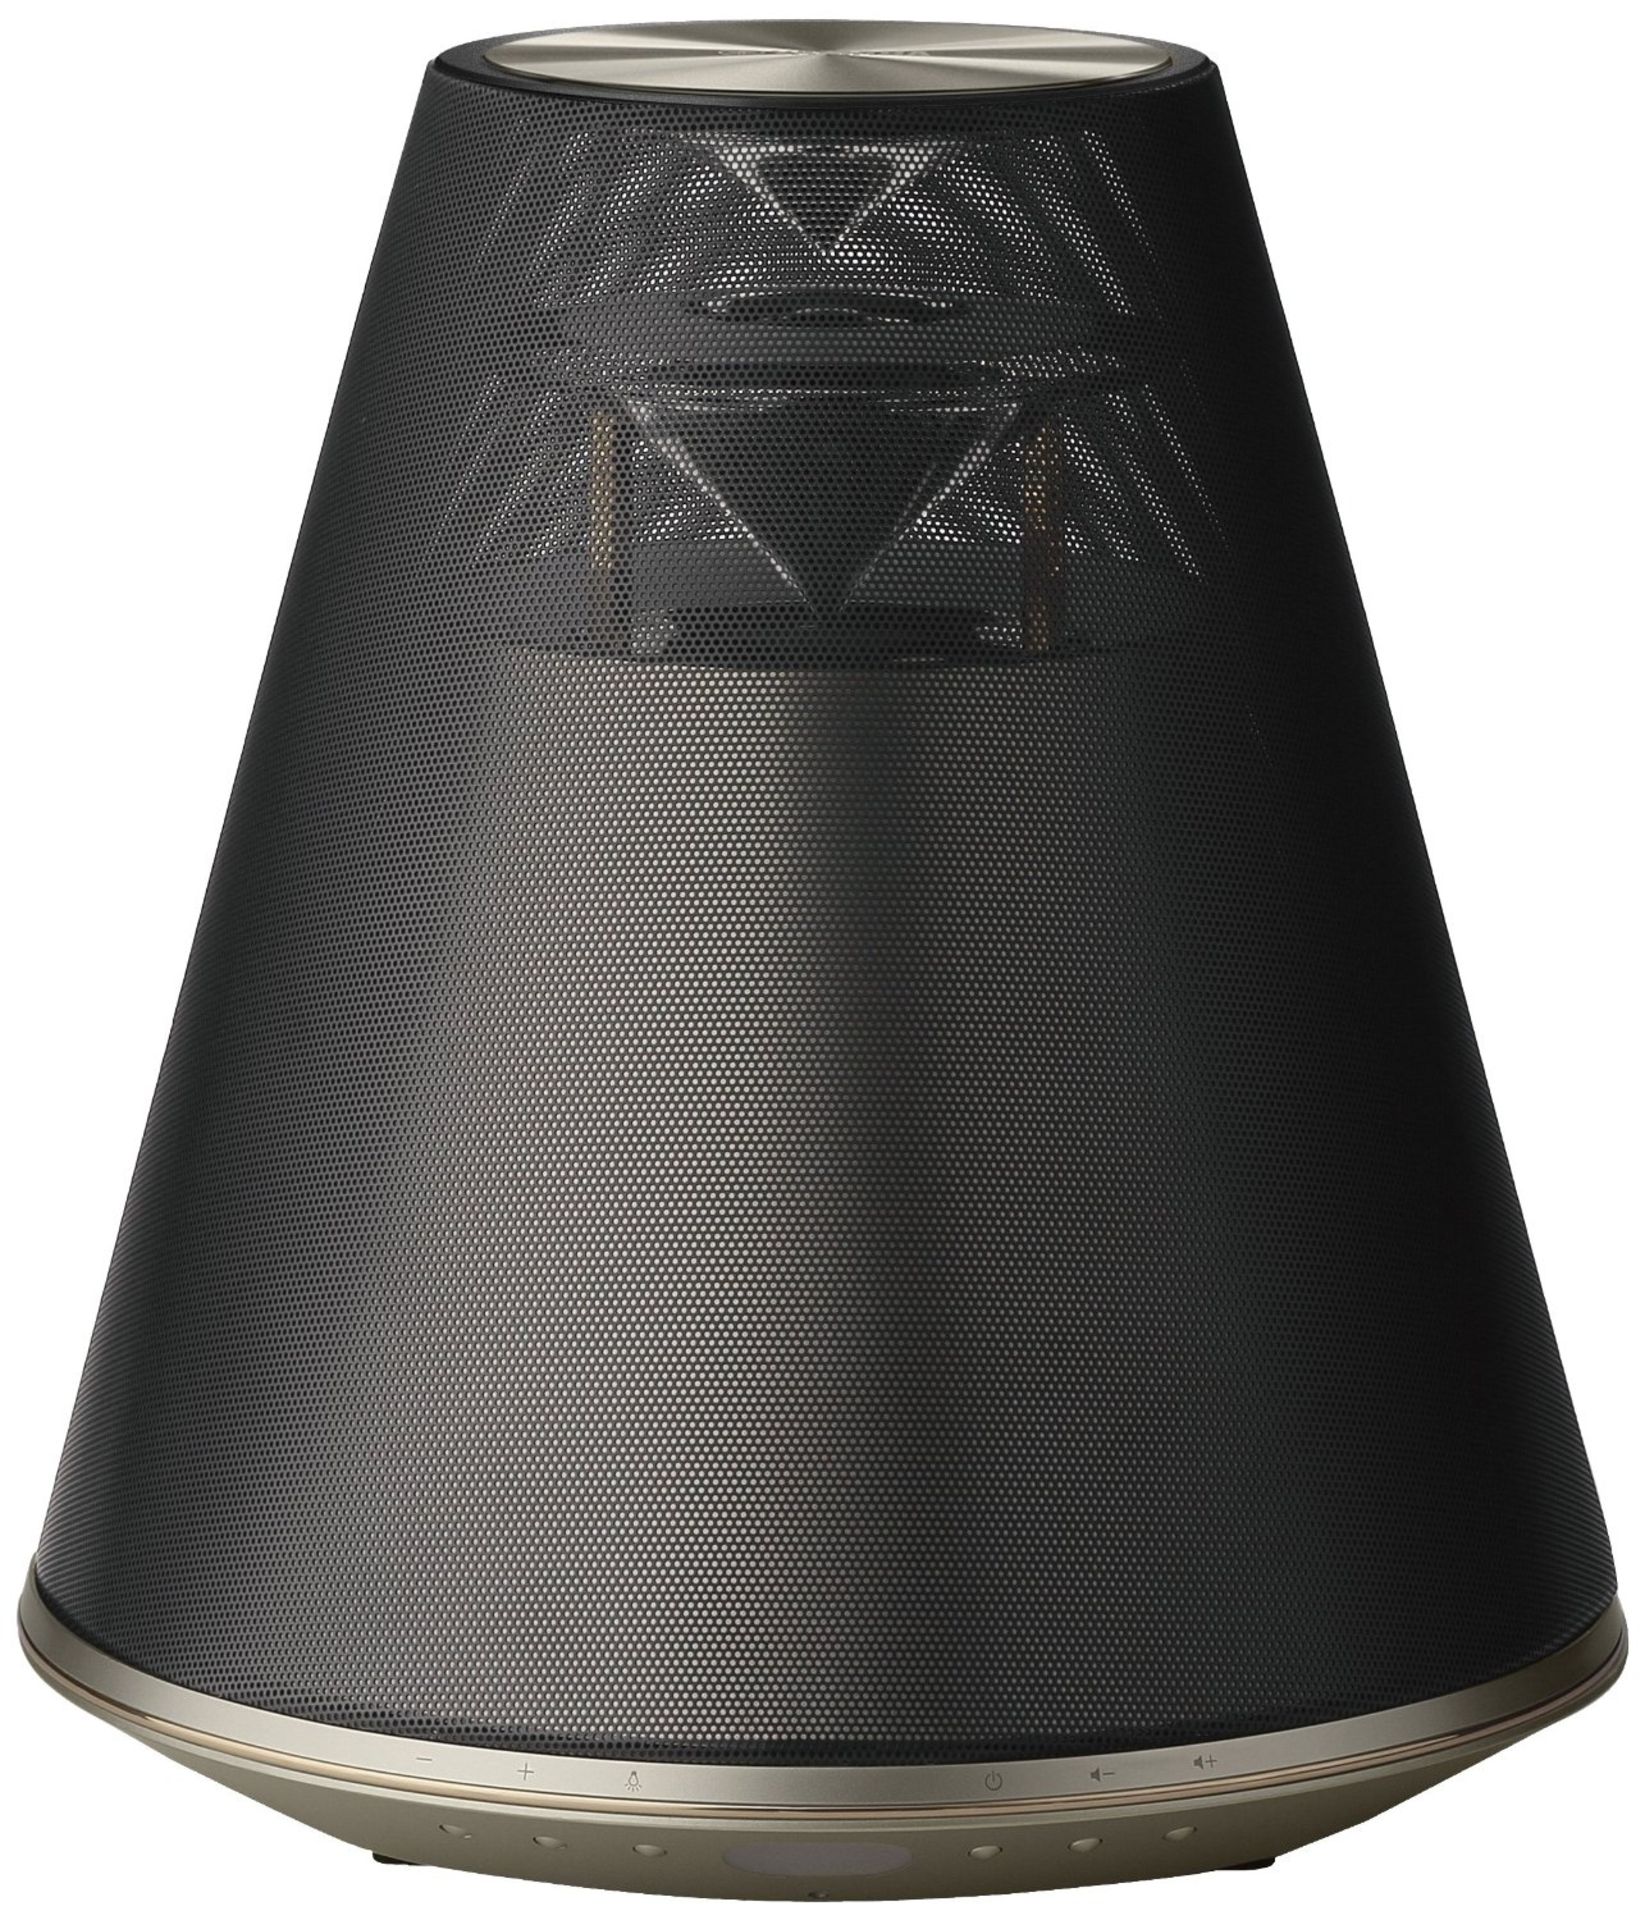 V Brand New Yamaha Relit LSX170 Desktop Bluetooth Wireless Speaker System with aptX and LED Lighting